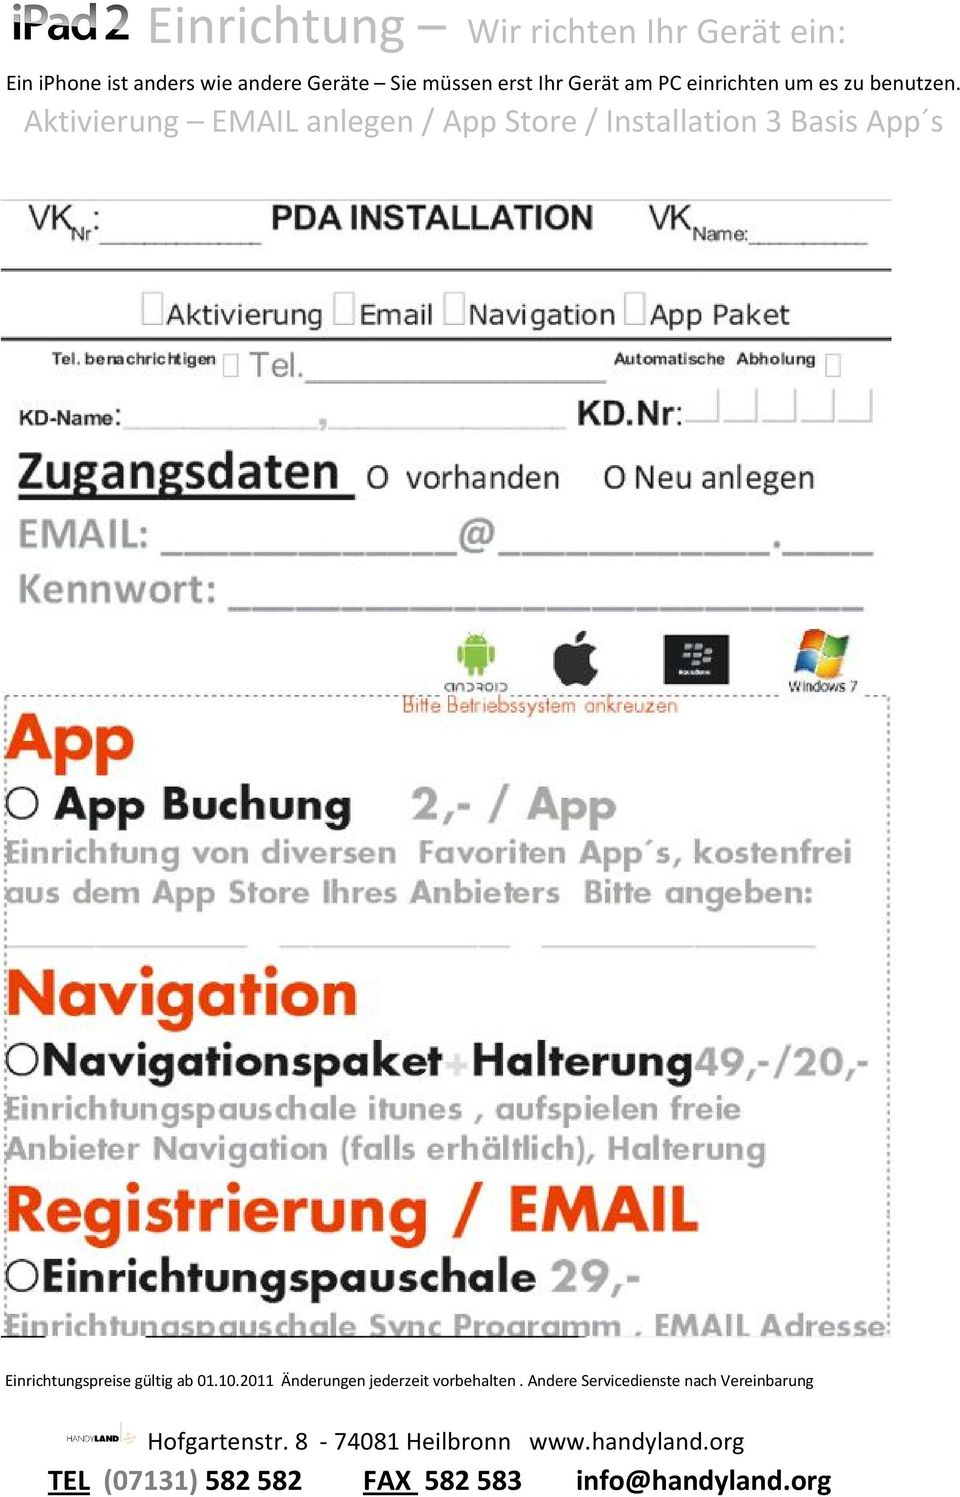 Aktivierung EMAIL anlegen / App Store / Installation 3 Basis App s